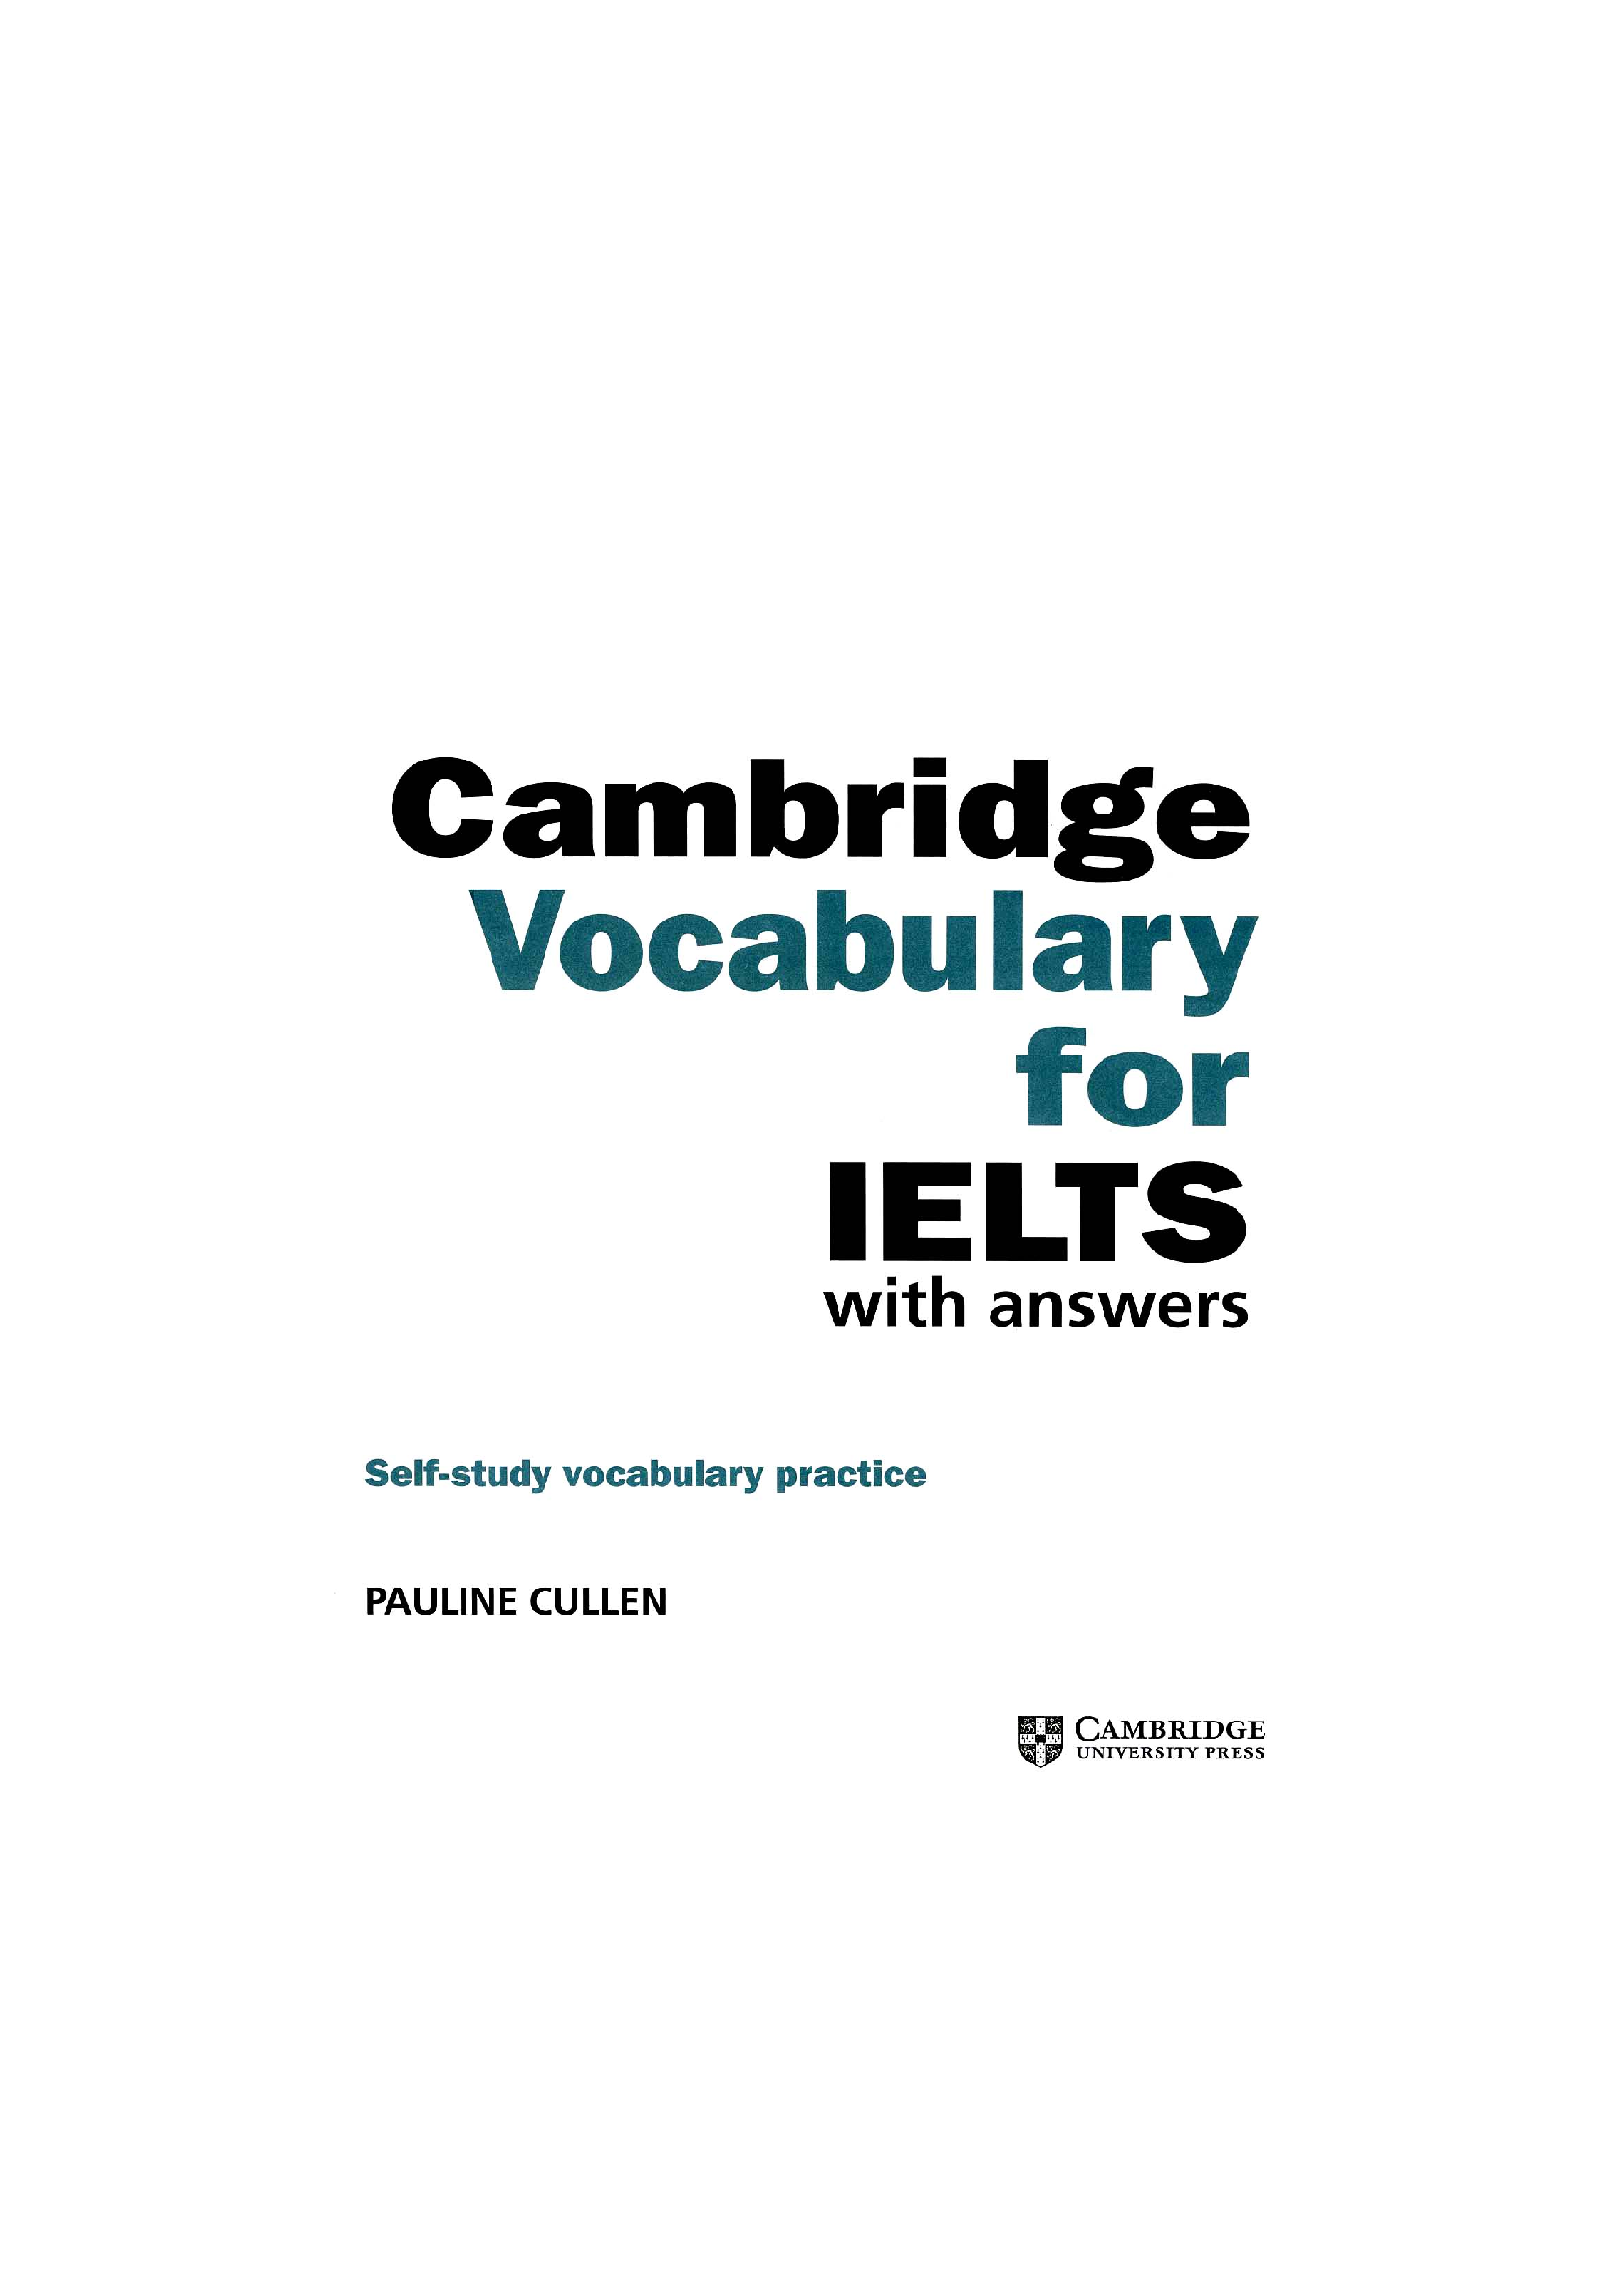 Sách Cambridge Vocabulary for IELTS PDF | Xem online, tải PDF miễn phí (trang 2)